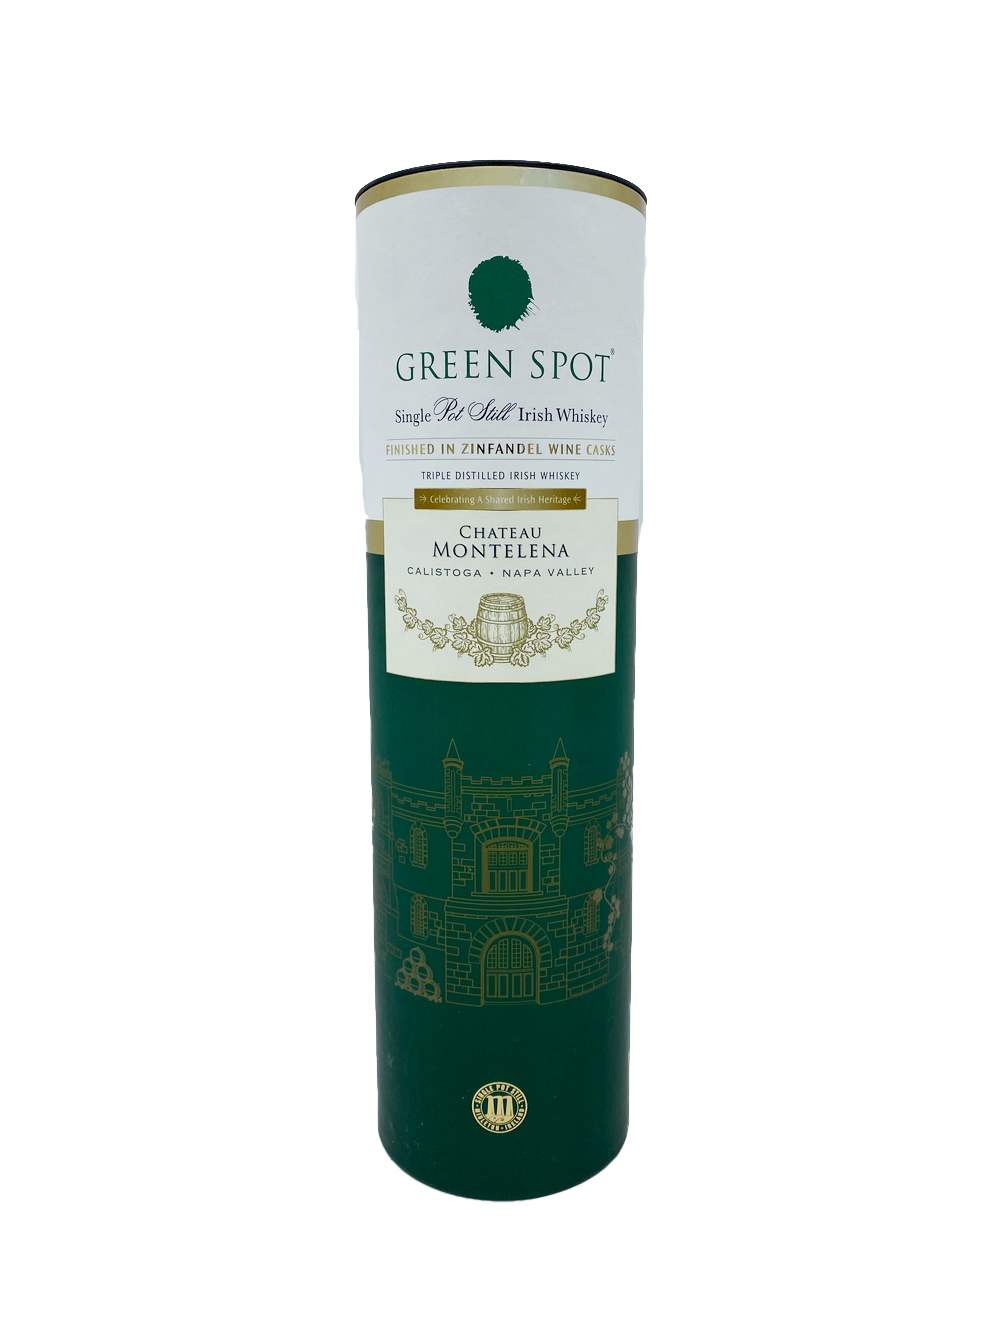 Green Spot Chateau Montelena Single Pot Still Irish Whiskey 750mL